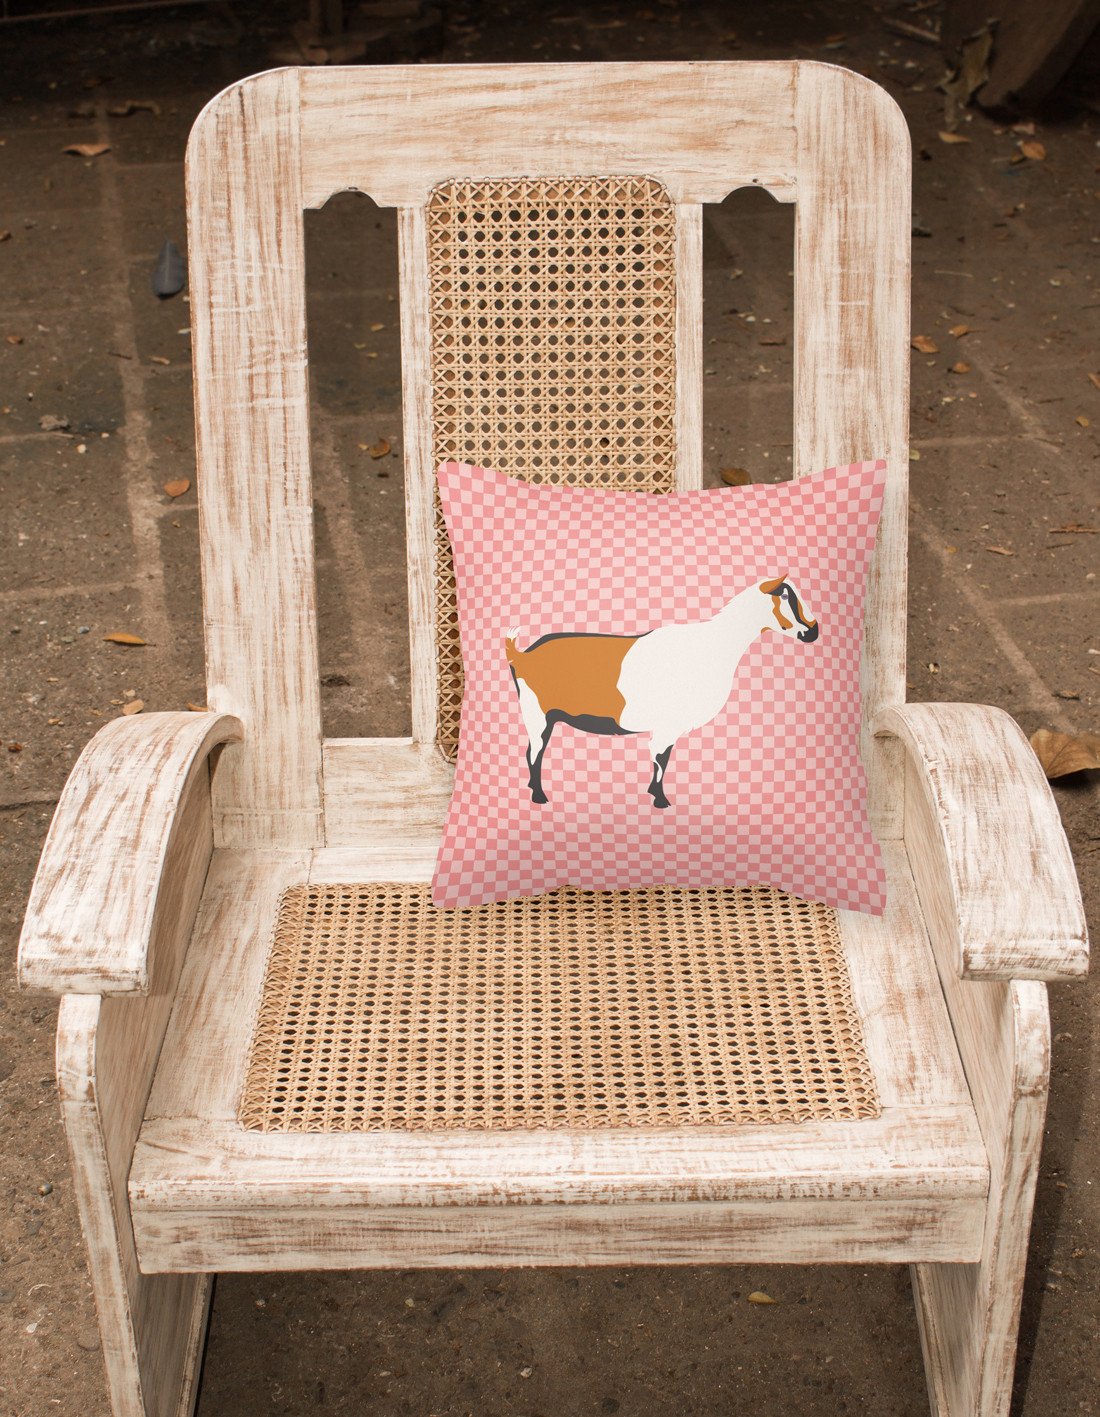 Alpine Goat Pink Check Fabric Decorative Pillow BB7880PW1818 by Caroline's Treasures